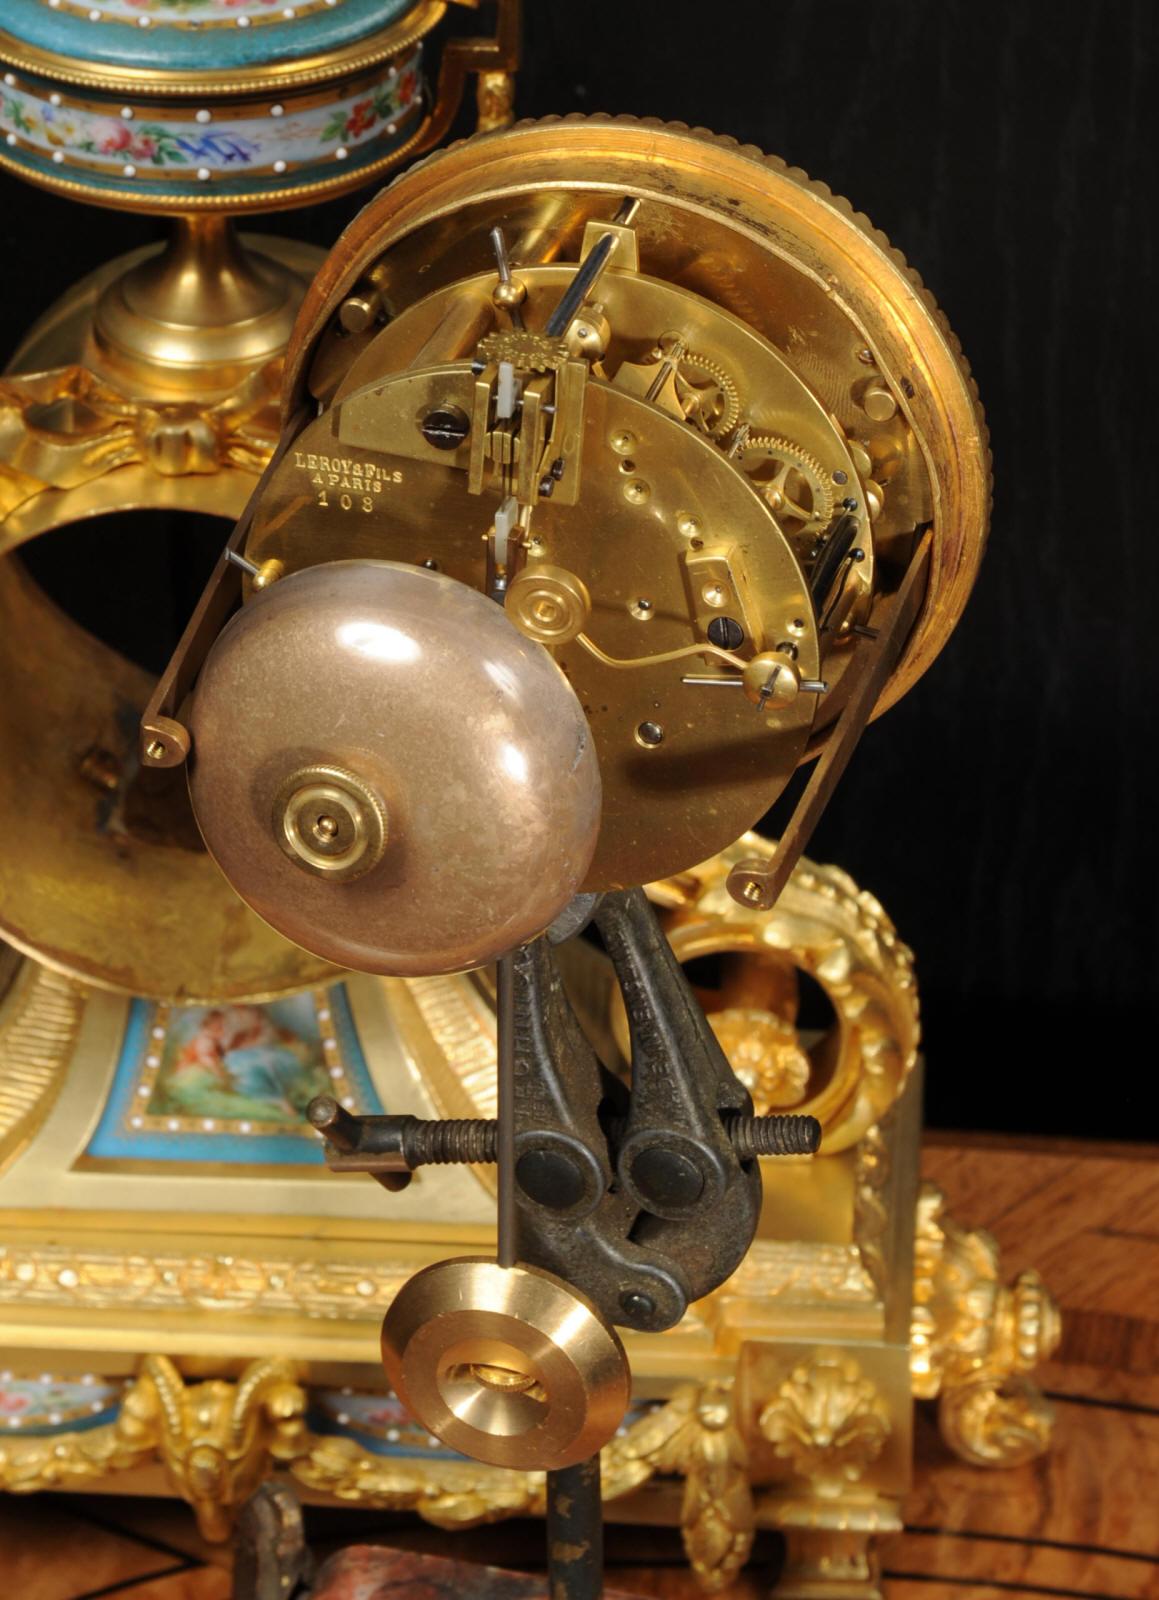 Ormolu and Sevres Porcelain Antique French Clock by Le Roy et Fils 14